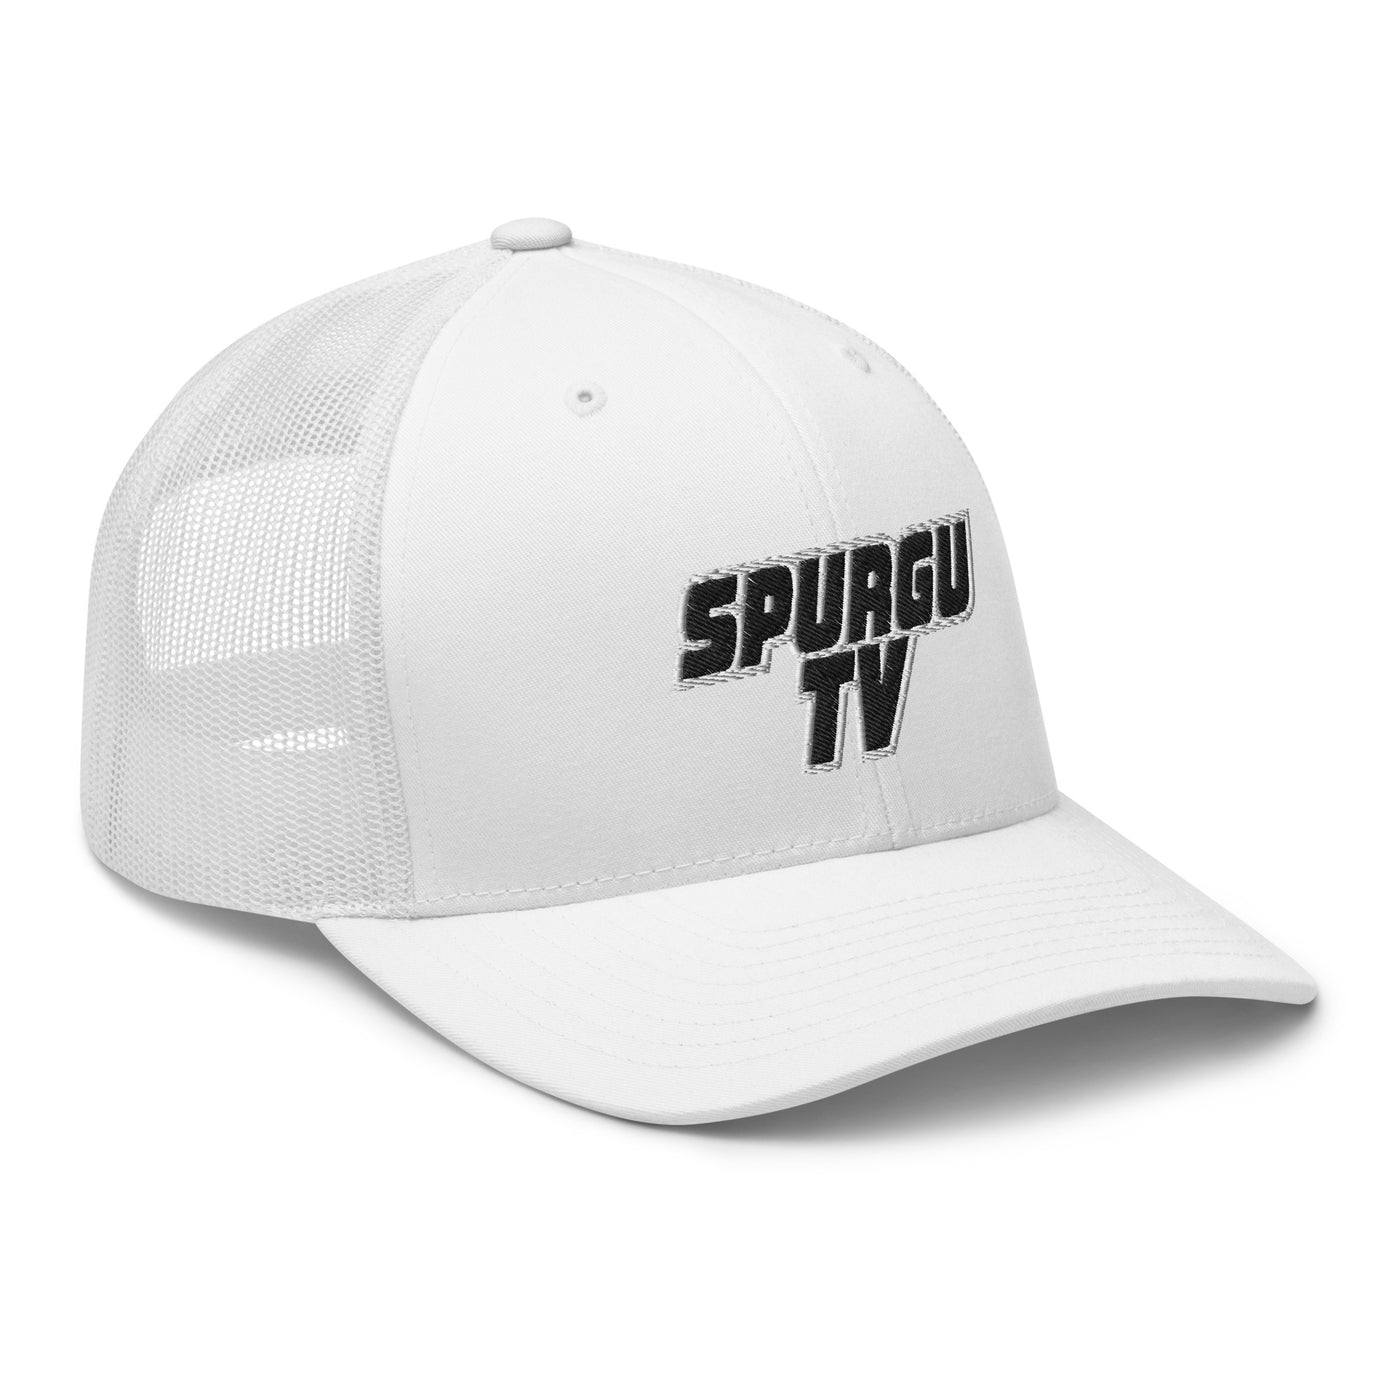 Spurgu-TV | Lippis logolla